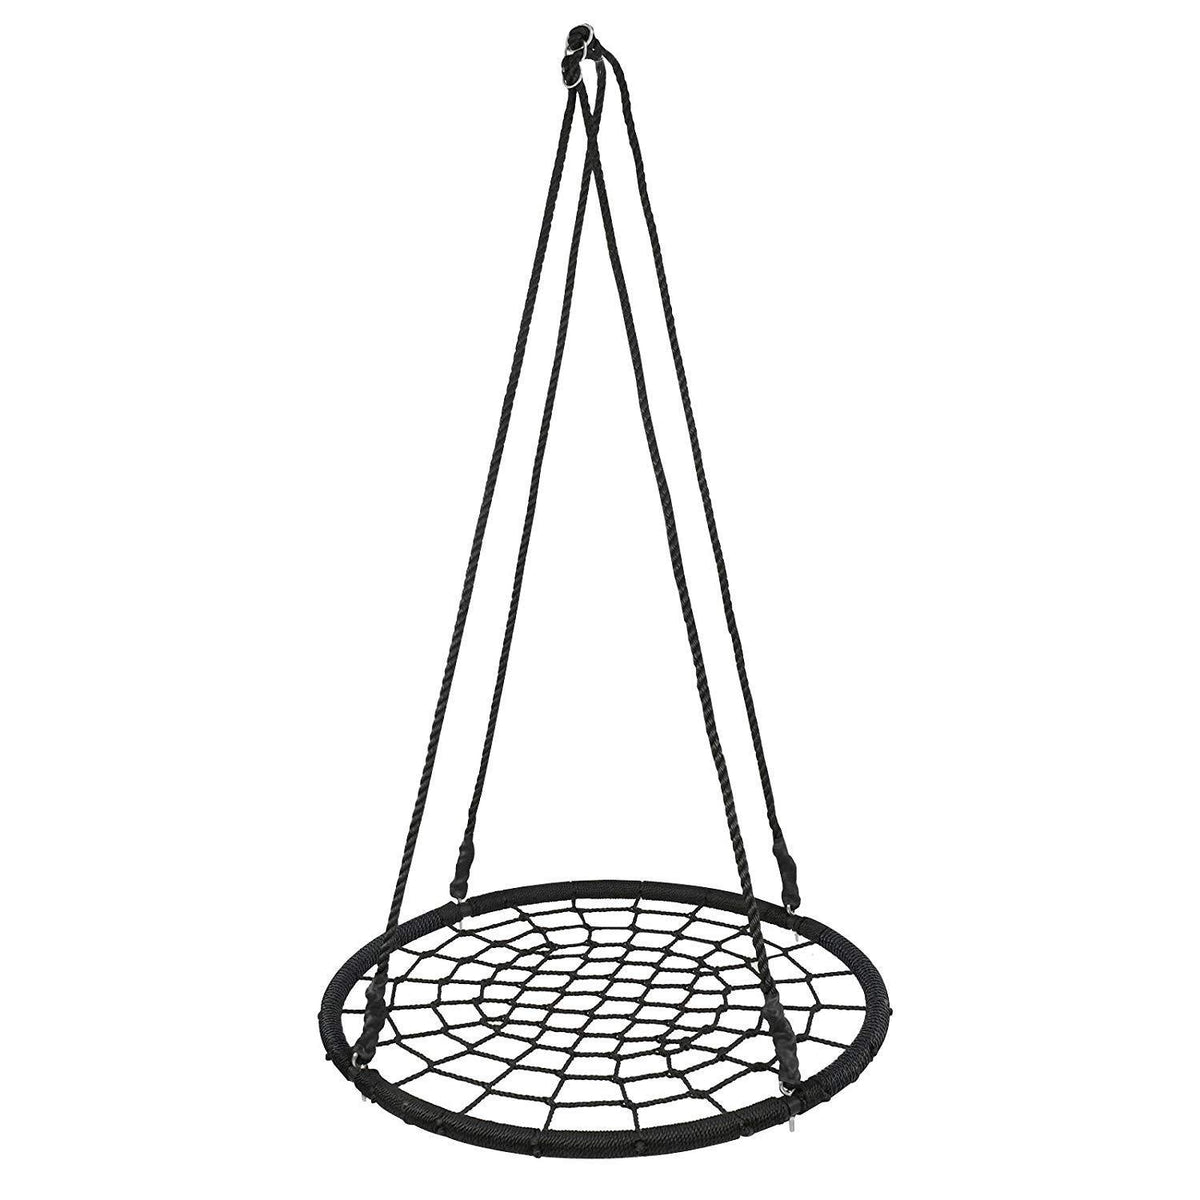 40'' Spider Web Tree Swing round Net Swing Platform Rope Swing Set